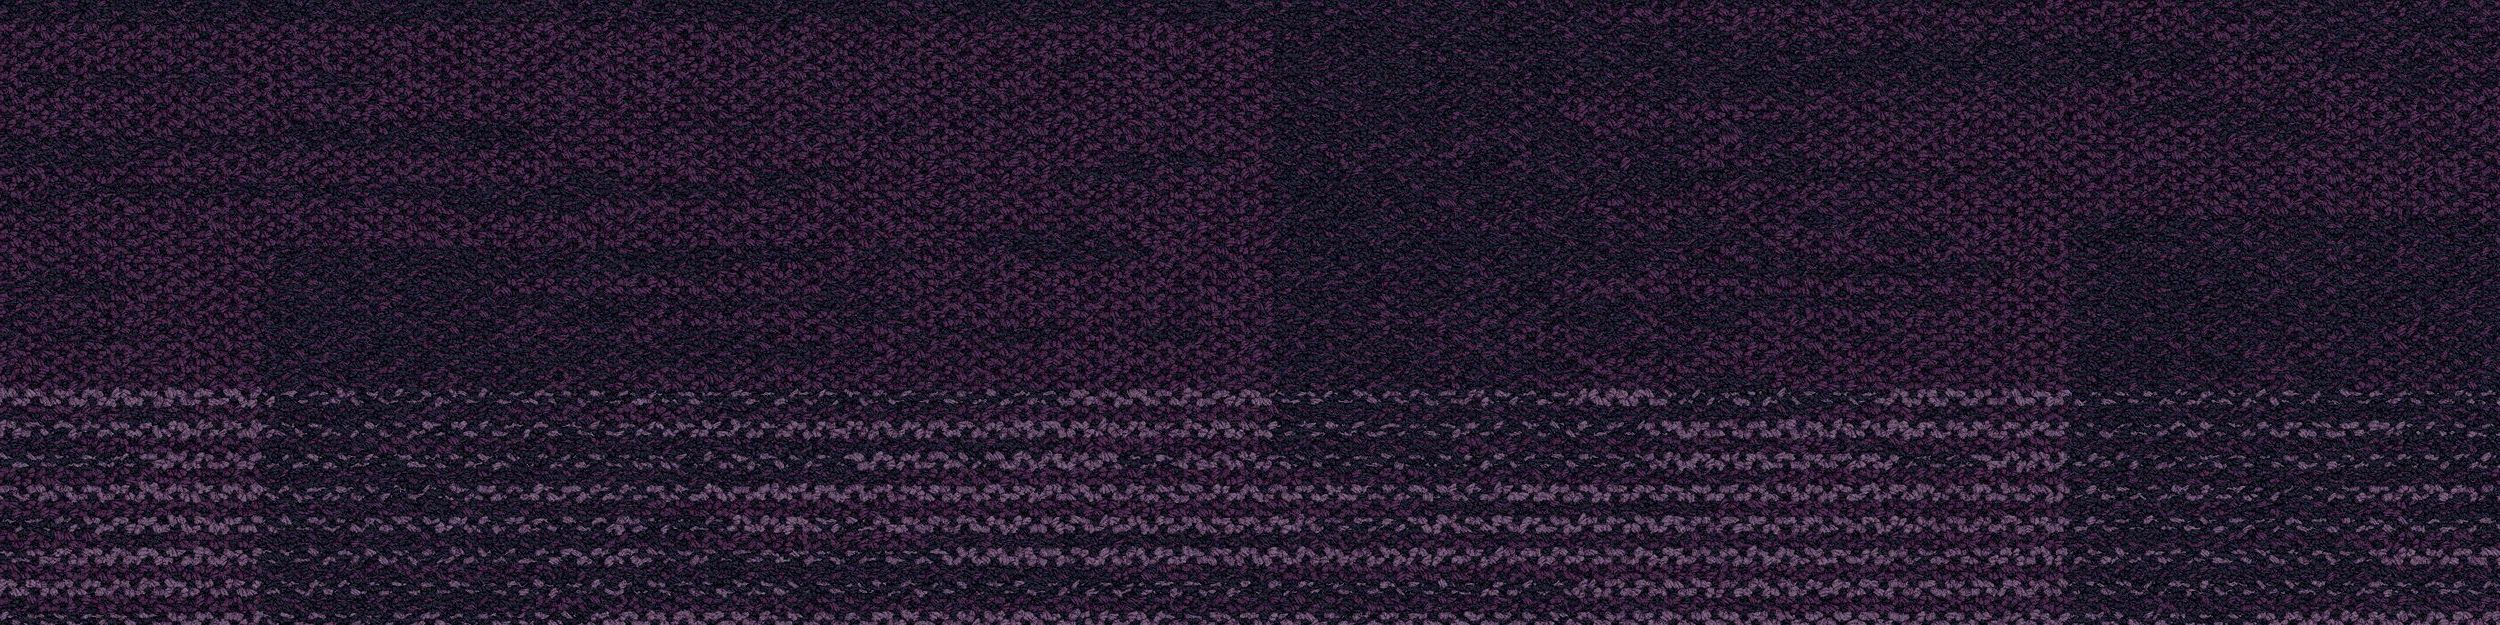 AE317 Carpet Tile In Iris image number 2